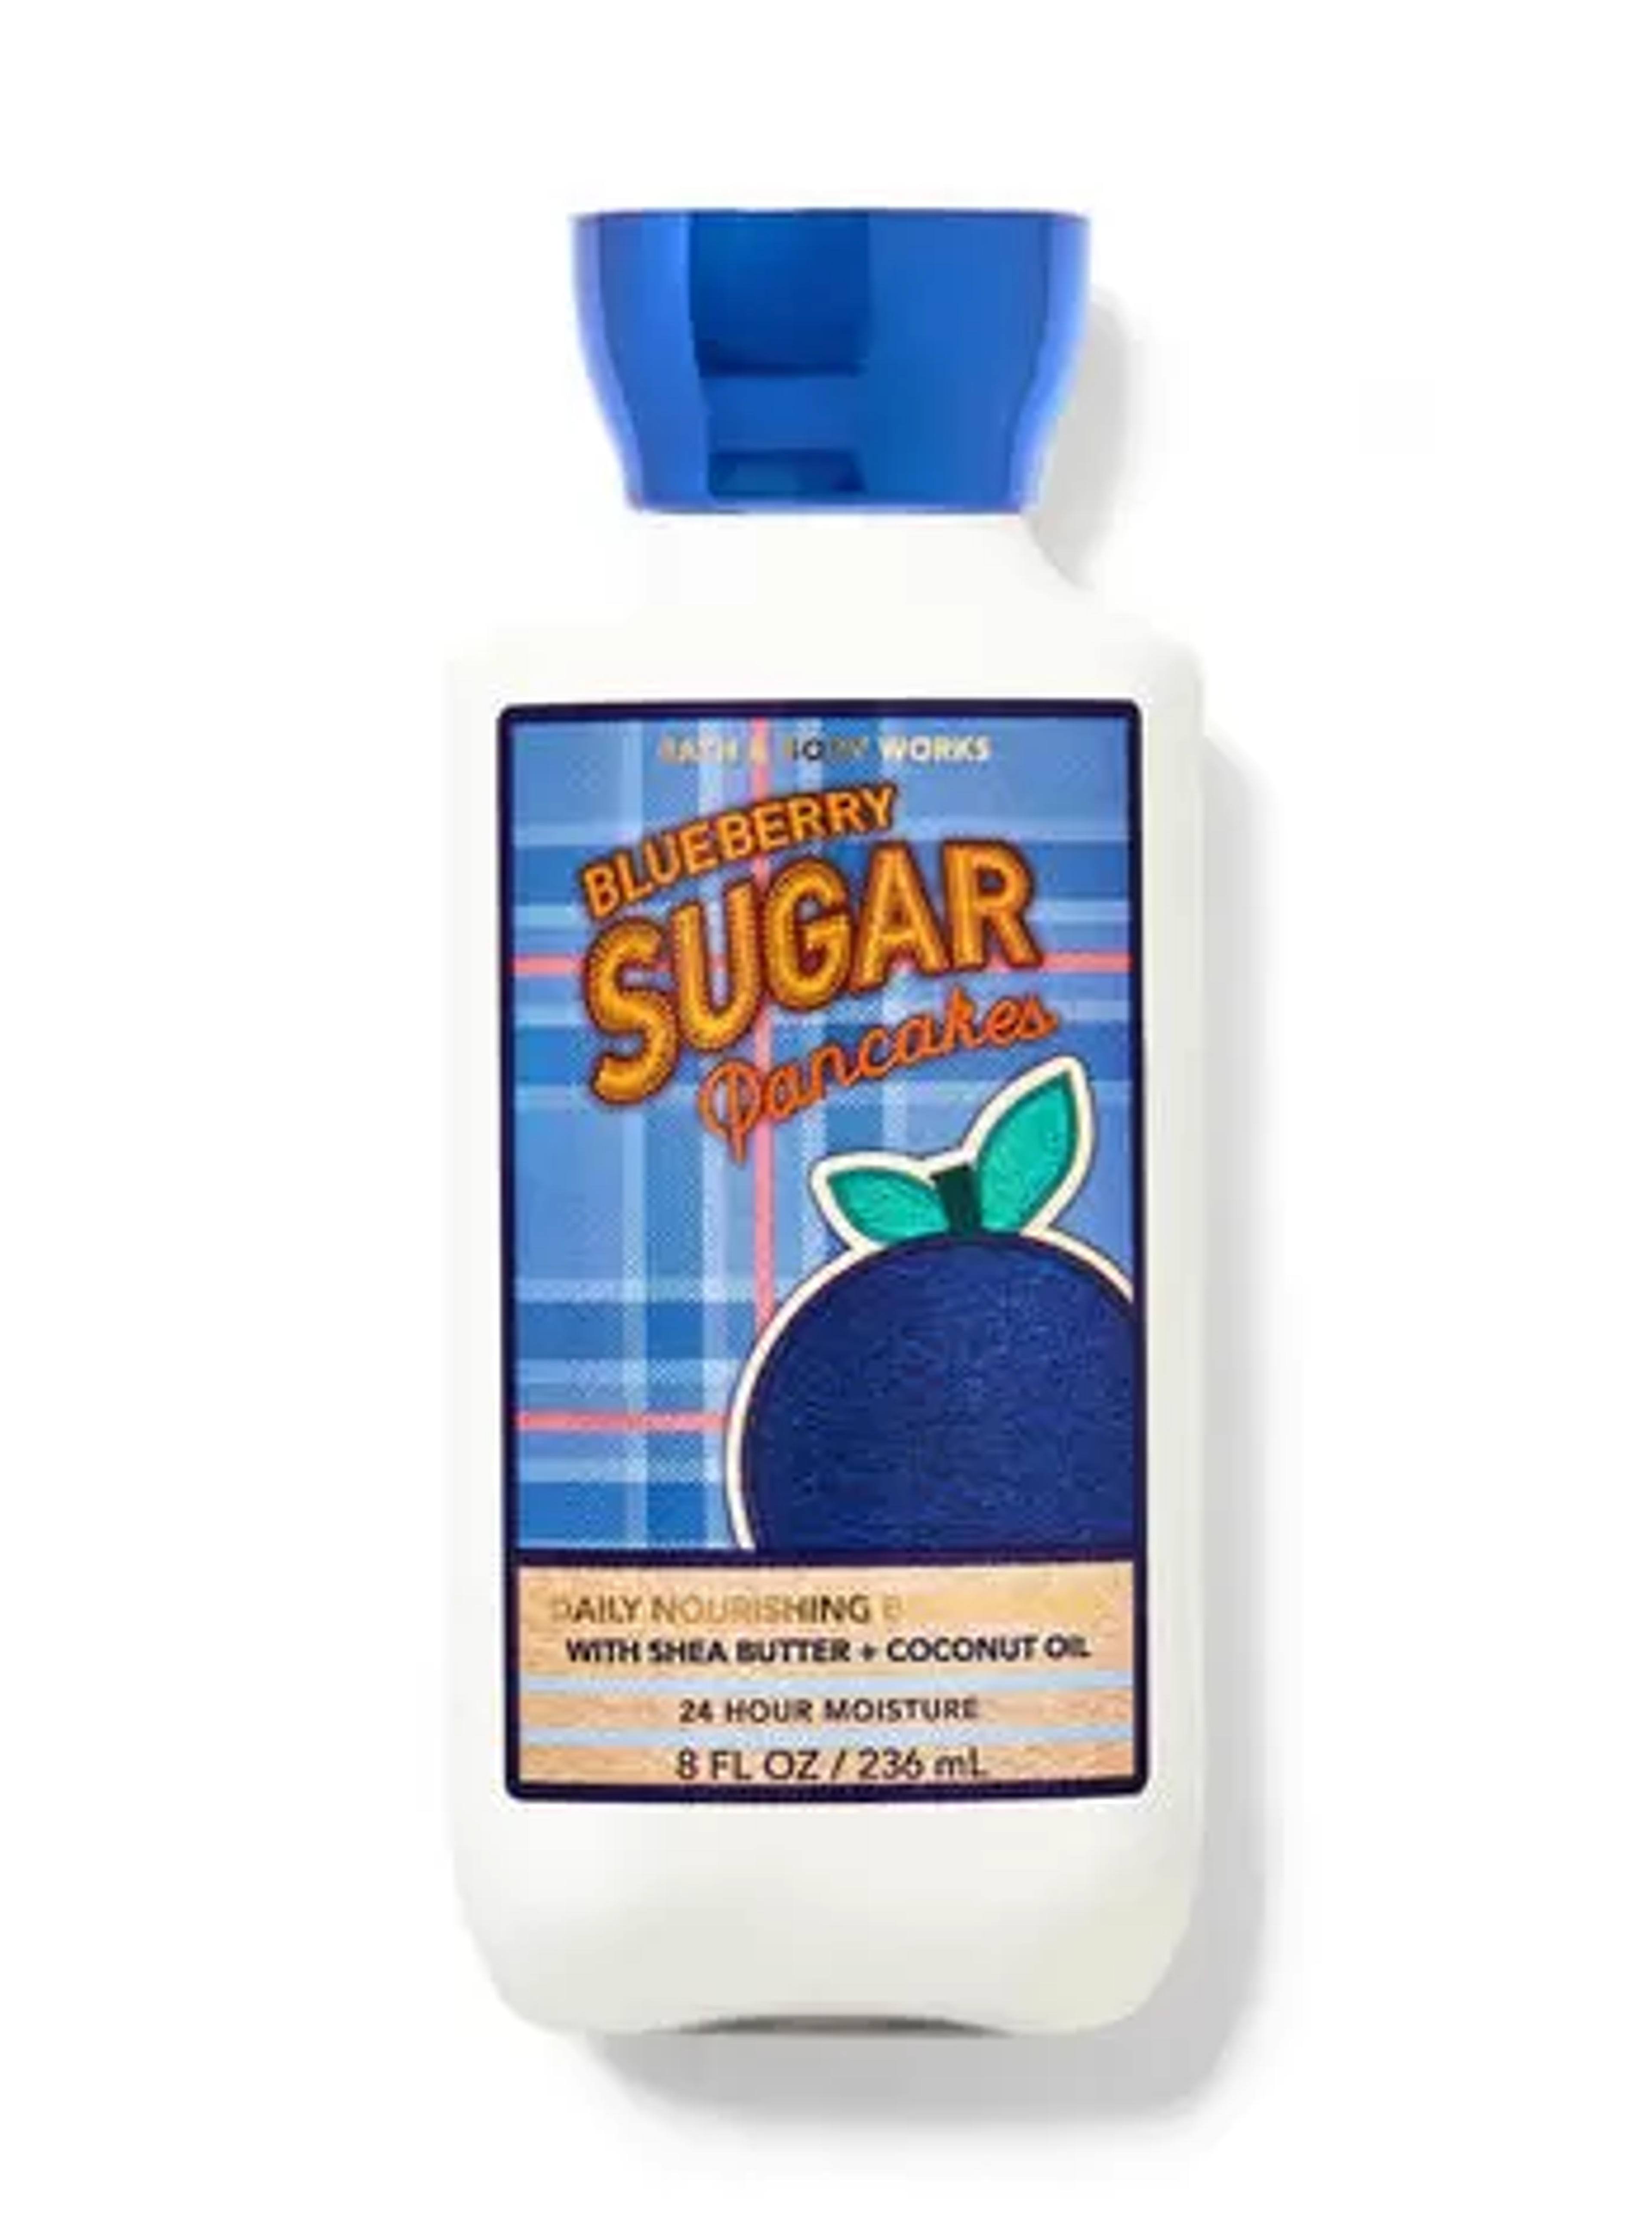 Blueberry Sugar Pancakes Daily Nourishing Body Lotion | Bath & Body Works